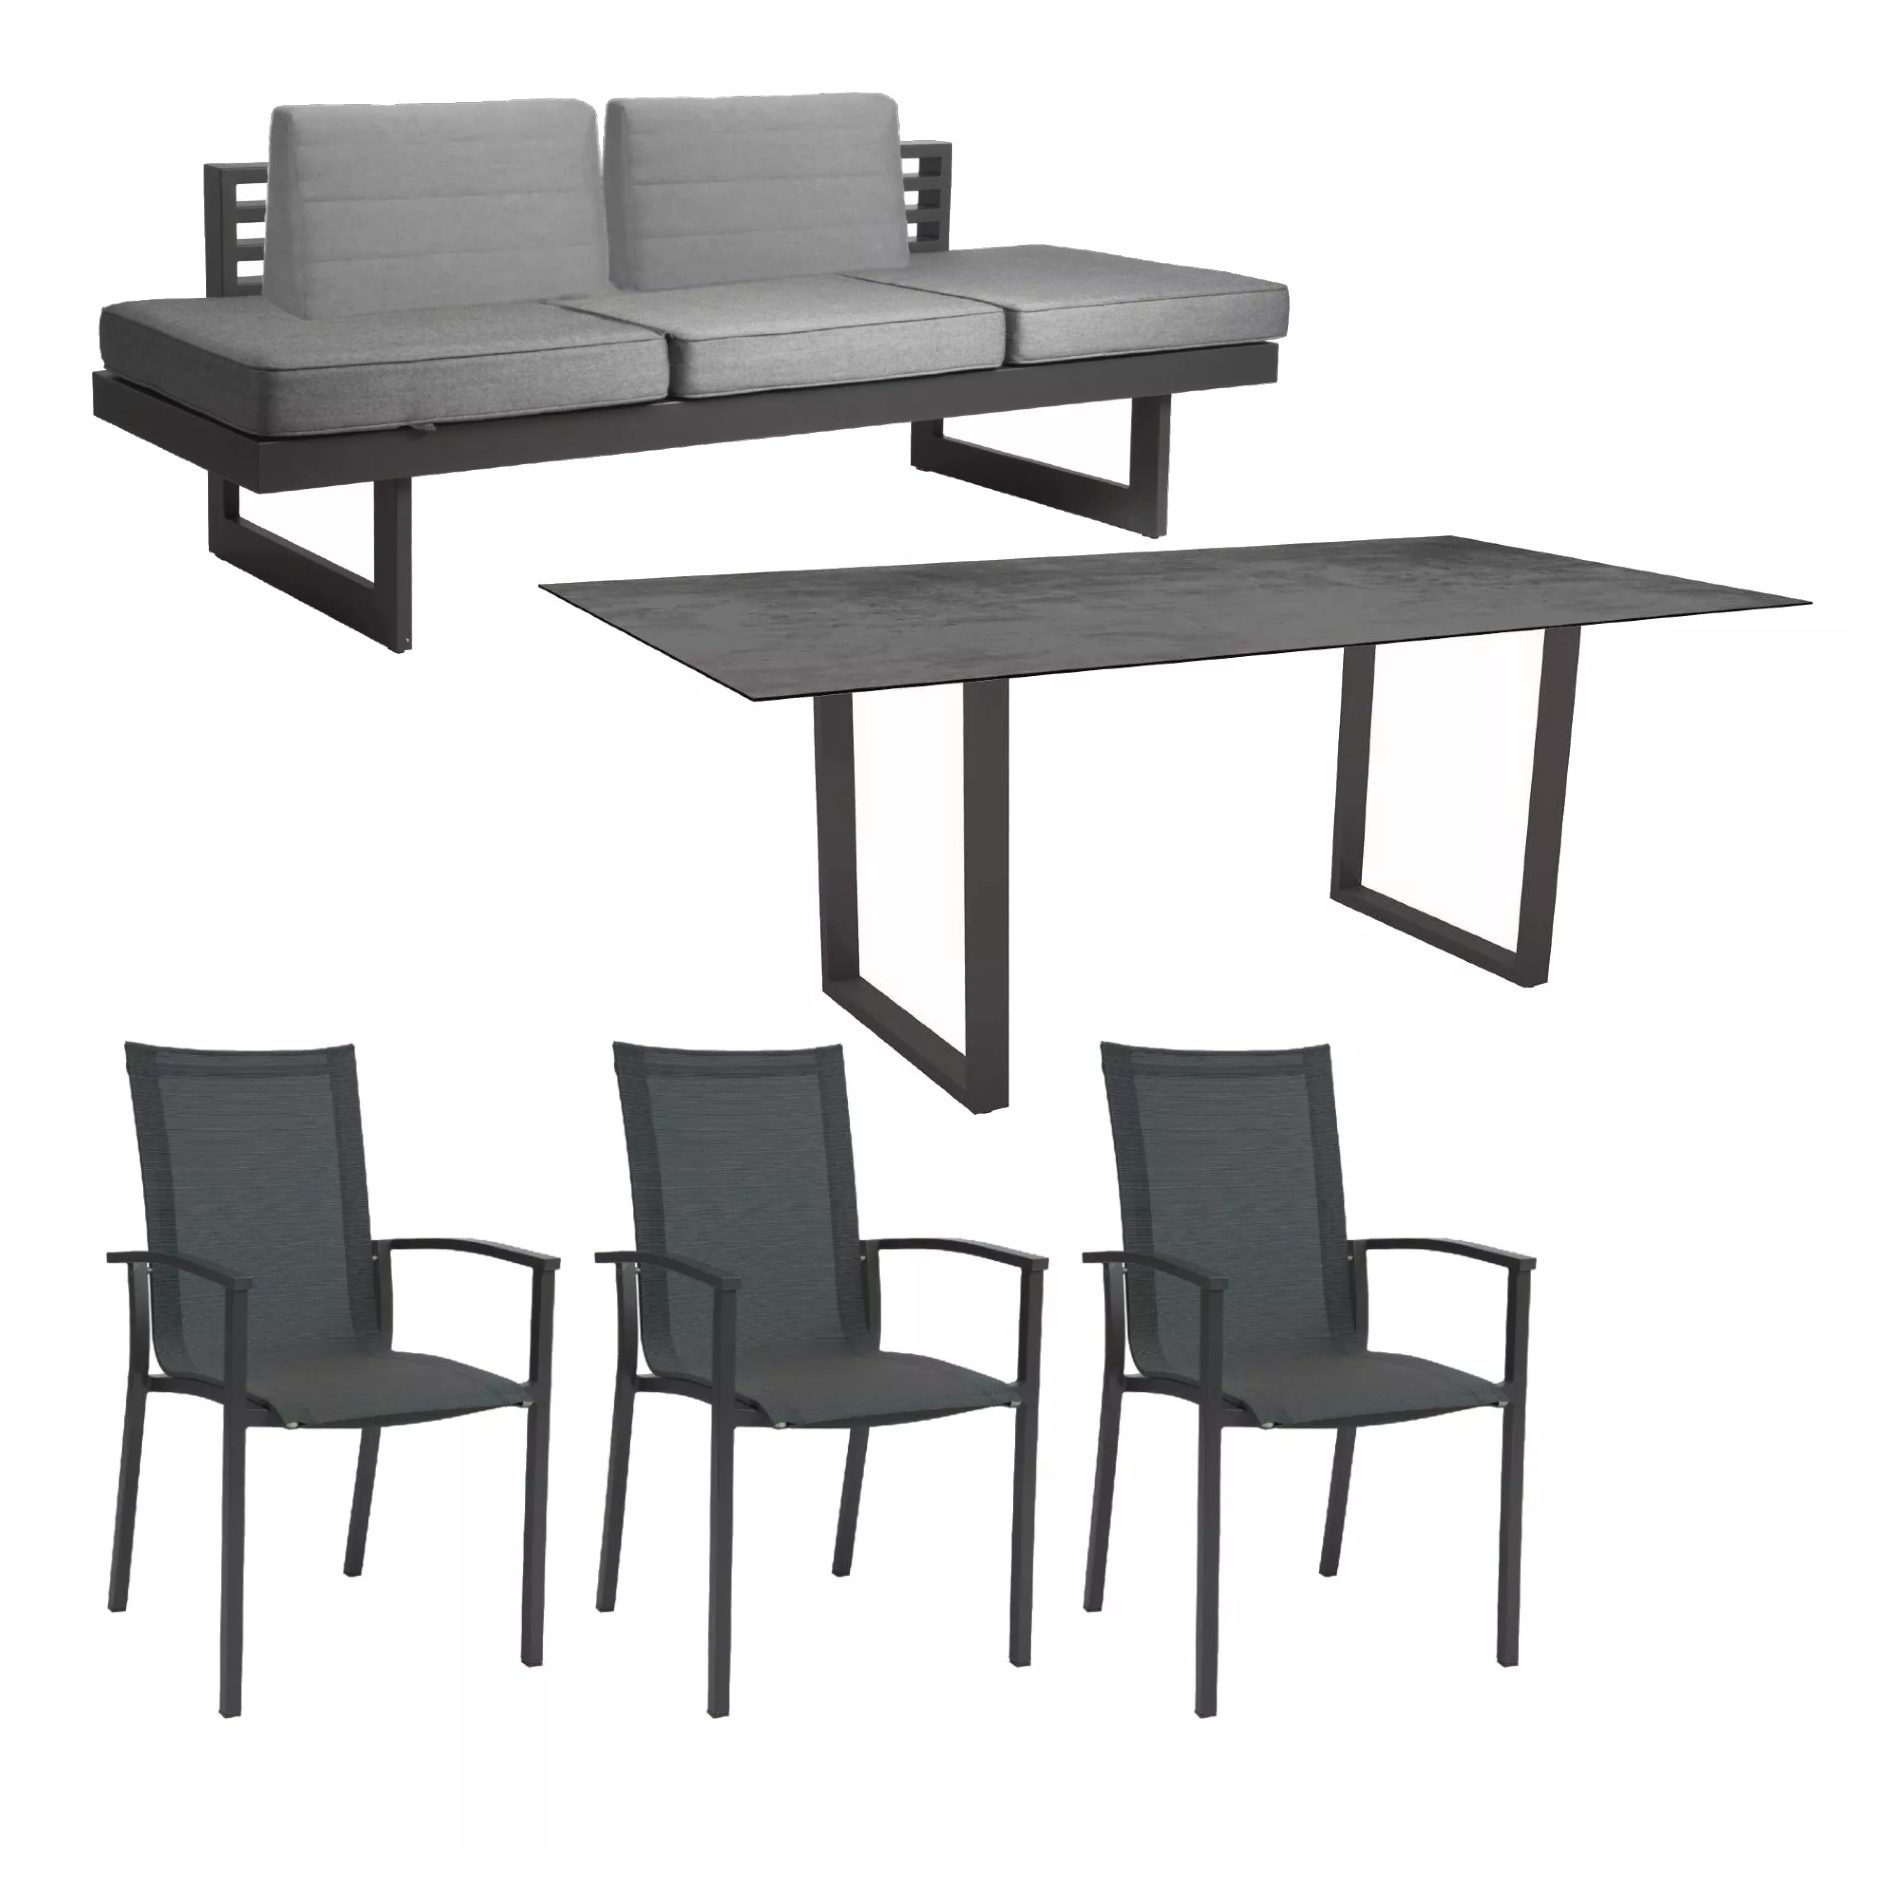 Stern "Evoee/New Holly Dining" Set mit Tisch 200x100 cm, Gestell Aluminium anthrazit, Sitzfläche Textil karbon, Polster seidengrau, Tischplatte HPL Zement